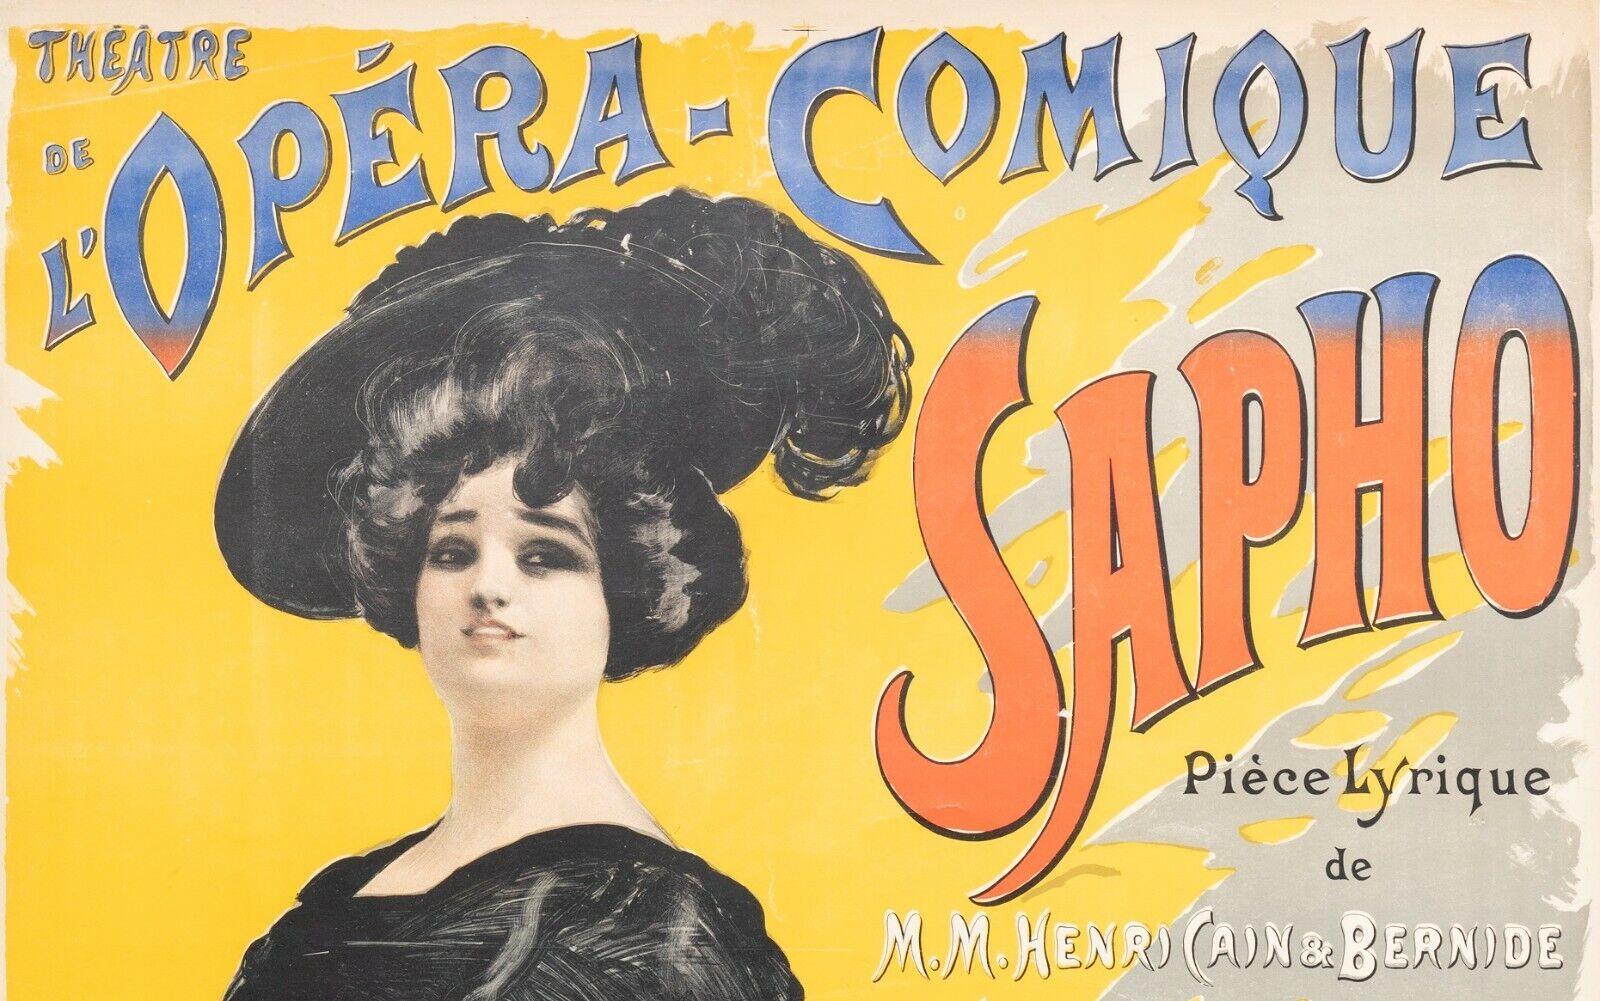 Original Poster-Pal-Syndrome Sapho Opera Comique-Théâtre-Lyrique-Soprano,1897

This poster promotes the lyric piece 